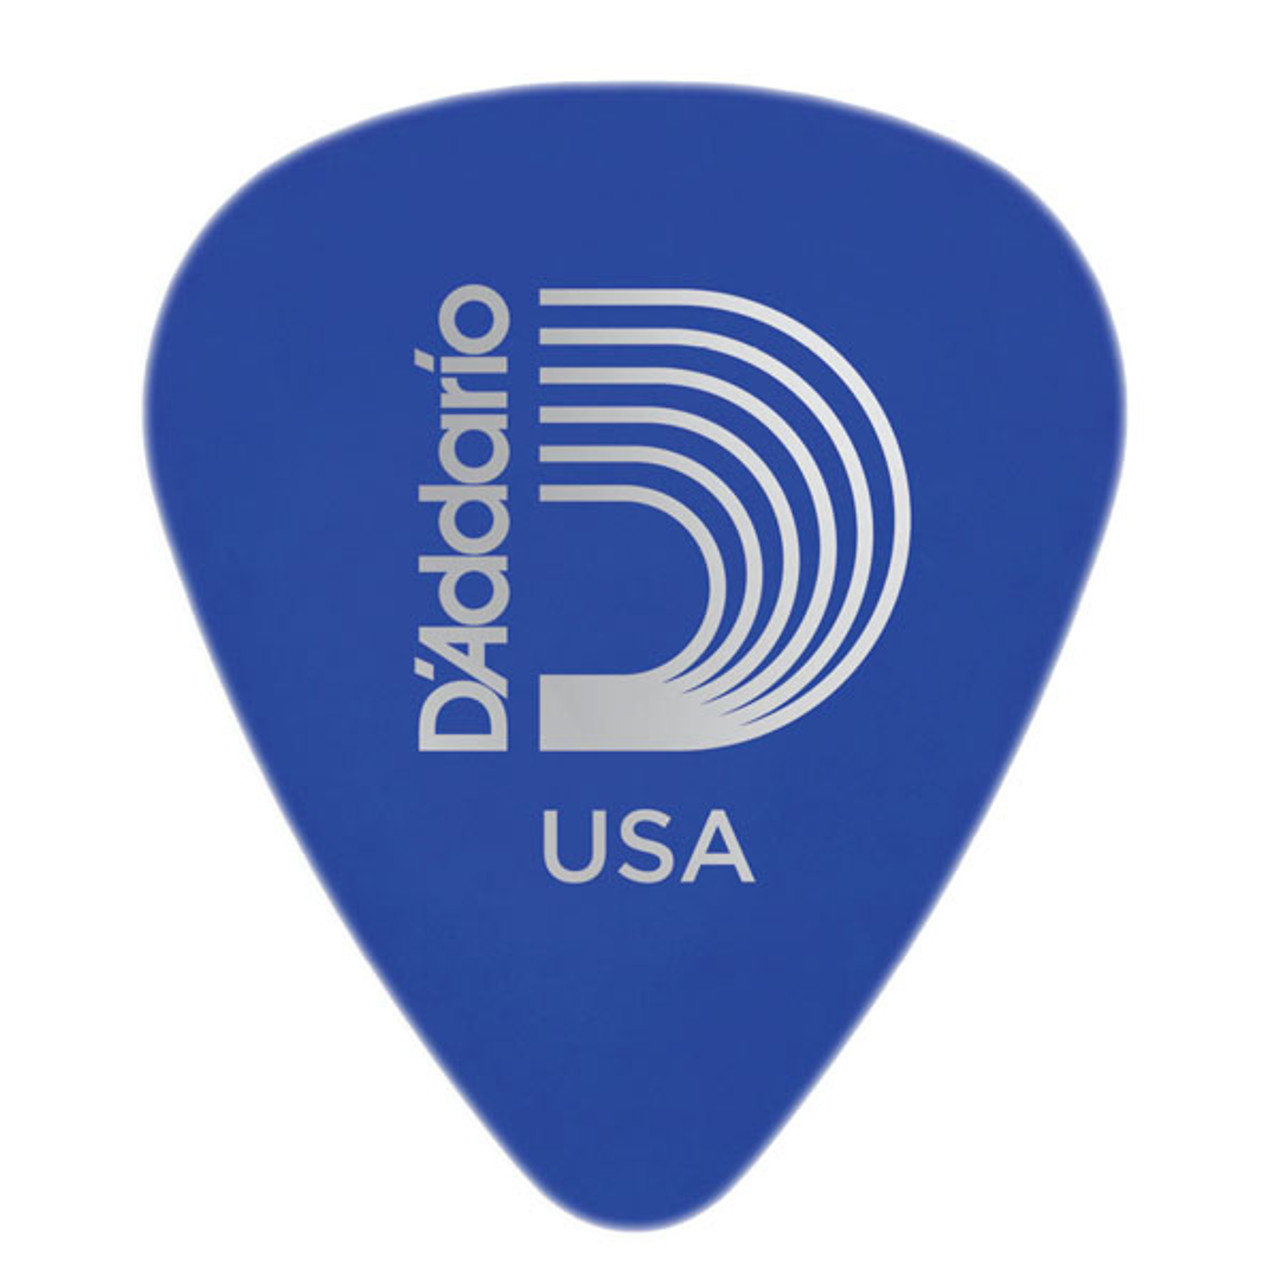 D'Addario Duralin Standard Guitar Picks - 10 Pack 1DYL3-10 Yellow  Light/Medium .70mm